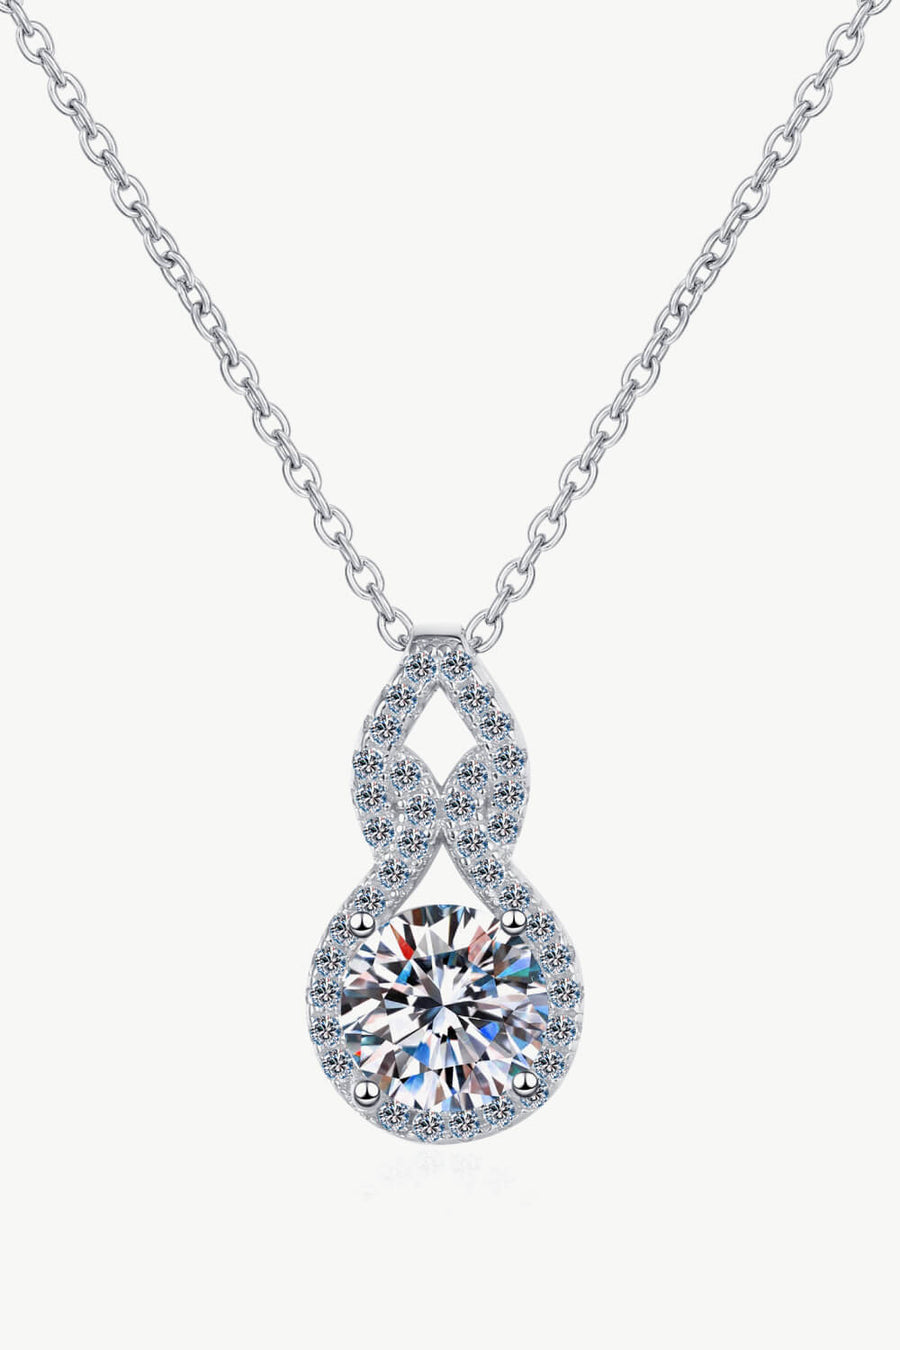 Best Diamond Necklace Jewelry Gifts for Women | 1 Carat Round Diamond Pendant Necklace | MASON New York